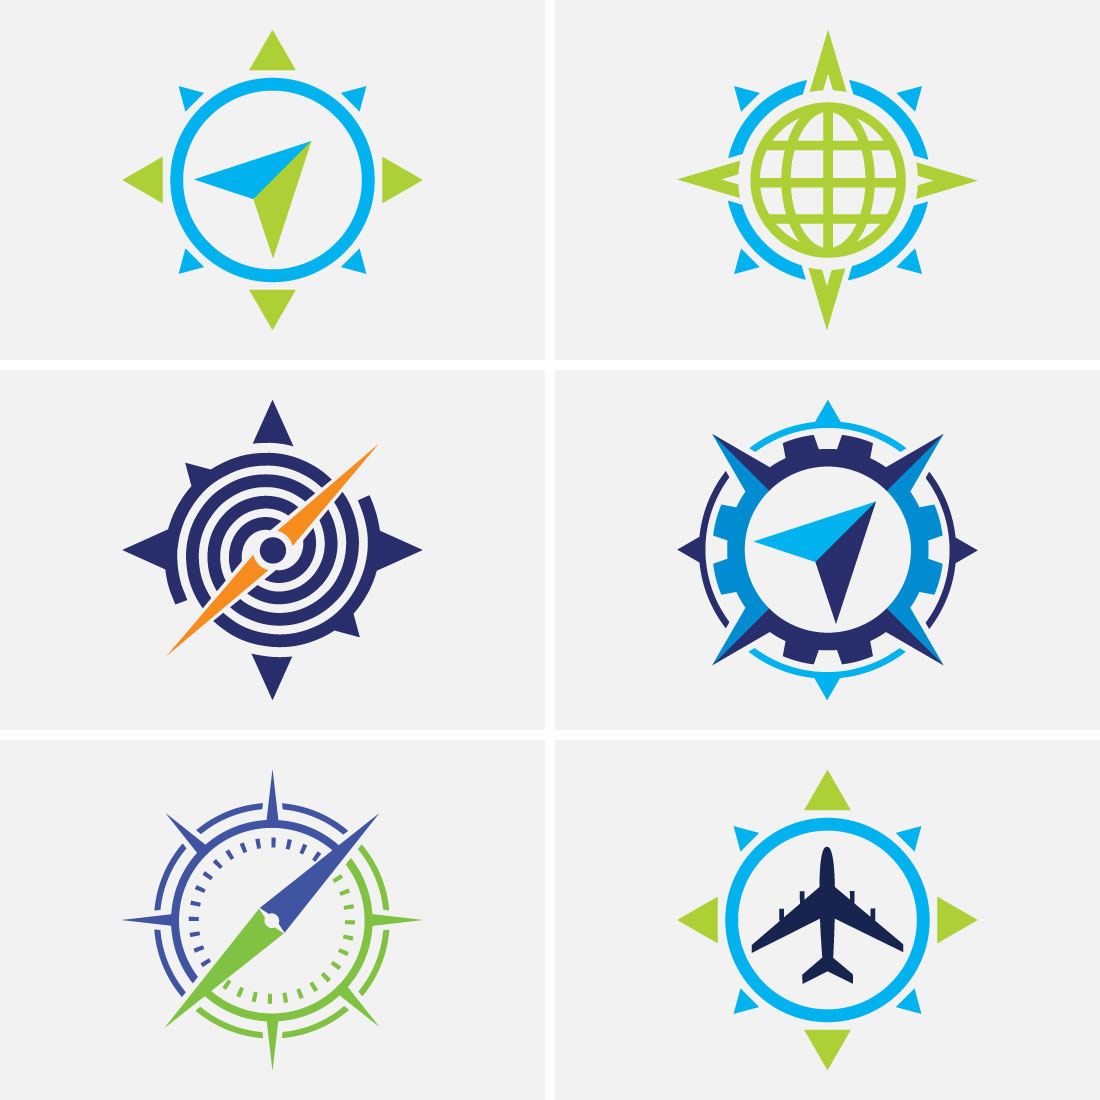 Creative Compass Concept Logo Design Template cover image.